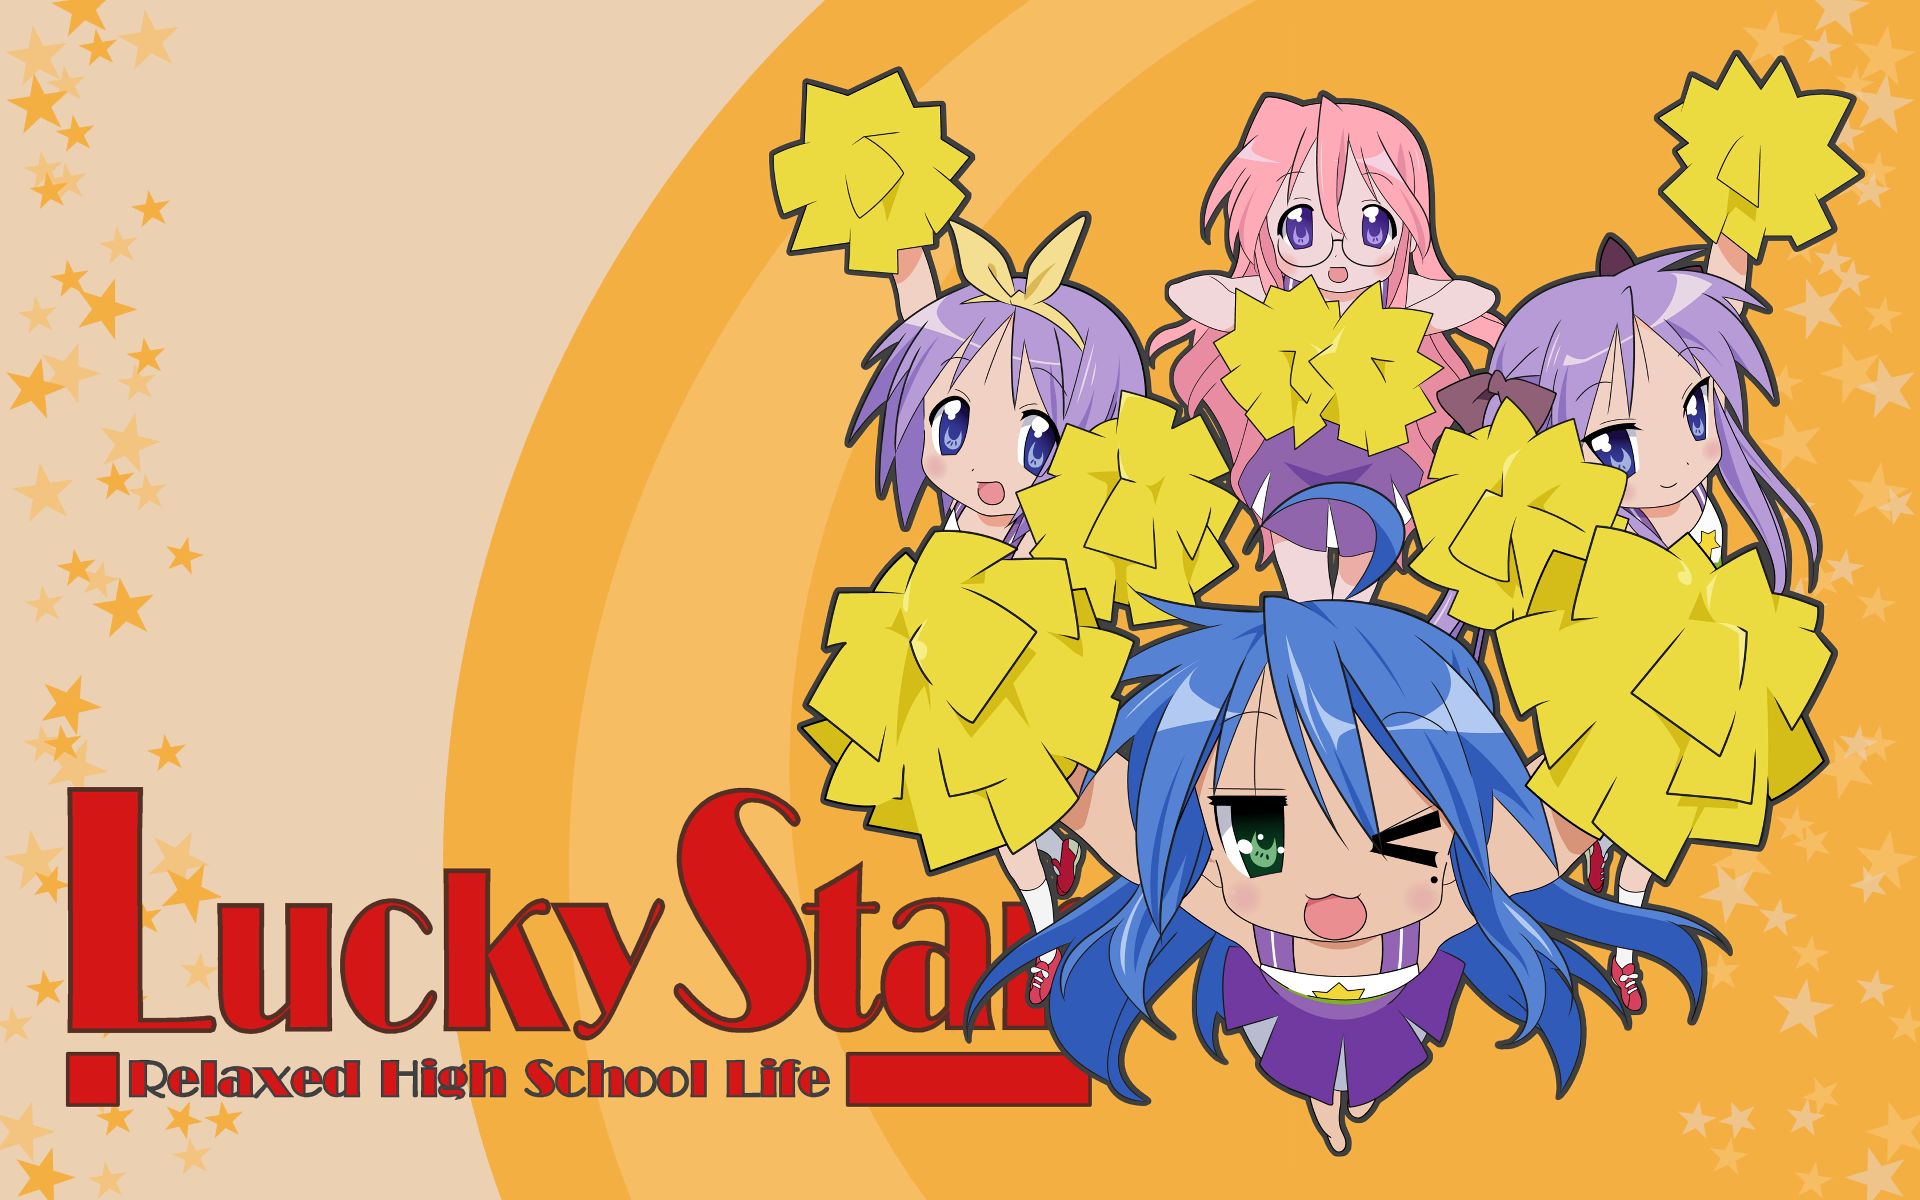 770713 Bild herunterladen animes, raki suta: lucky star, kagami hiiragi, konata izumi, miyuki takara, tsukasa hiiragi - Hintergrundbilder und Bildschirmschoner kostenlos